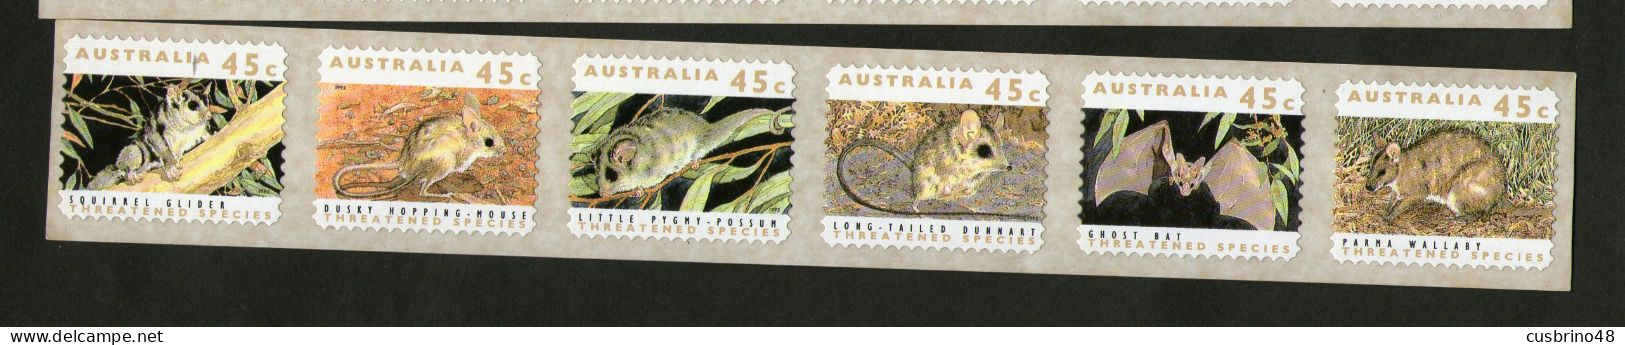 AUSTRALIA 1992 P & S Strip 45c Endangered Species Strip 6 PRINTSET 1 Koala Reprint. - Lot  AUS 236 - Nuevos